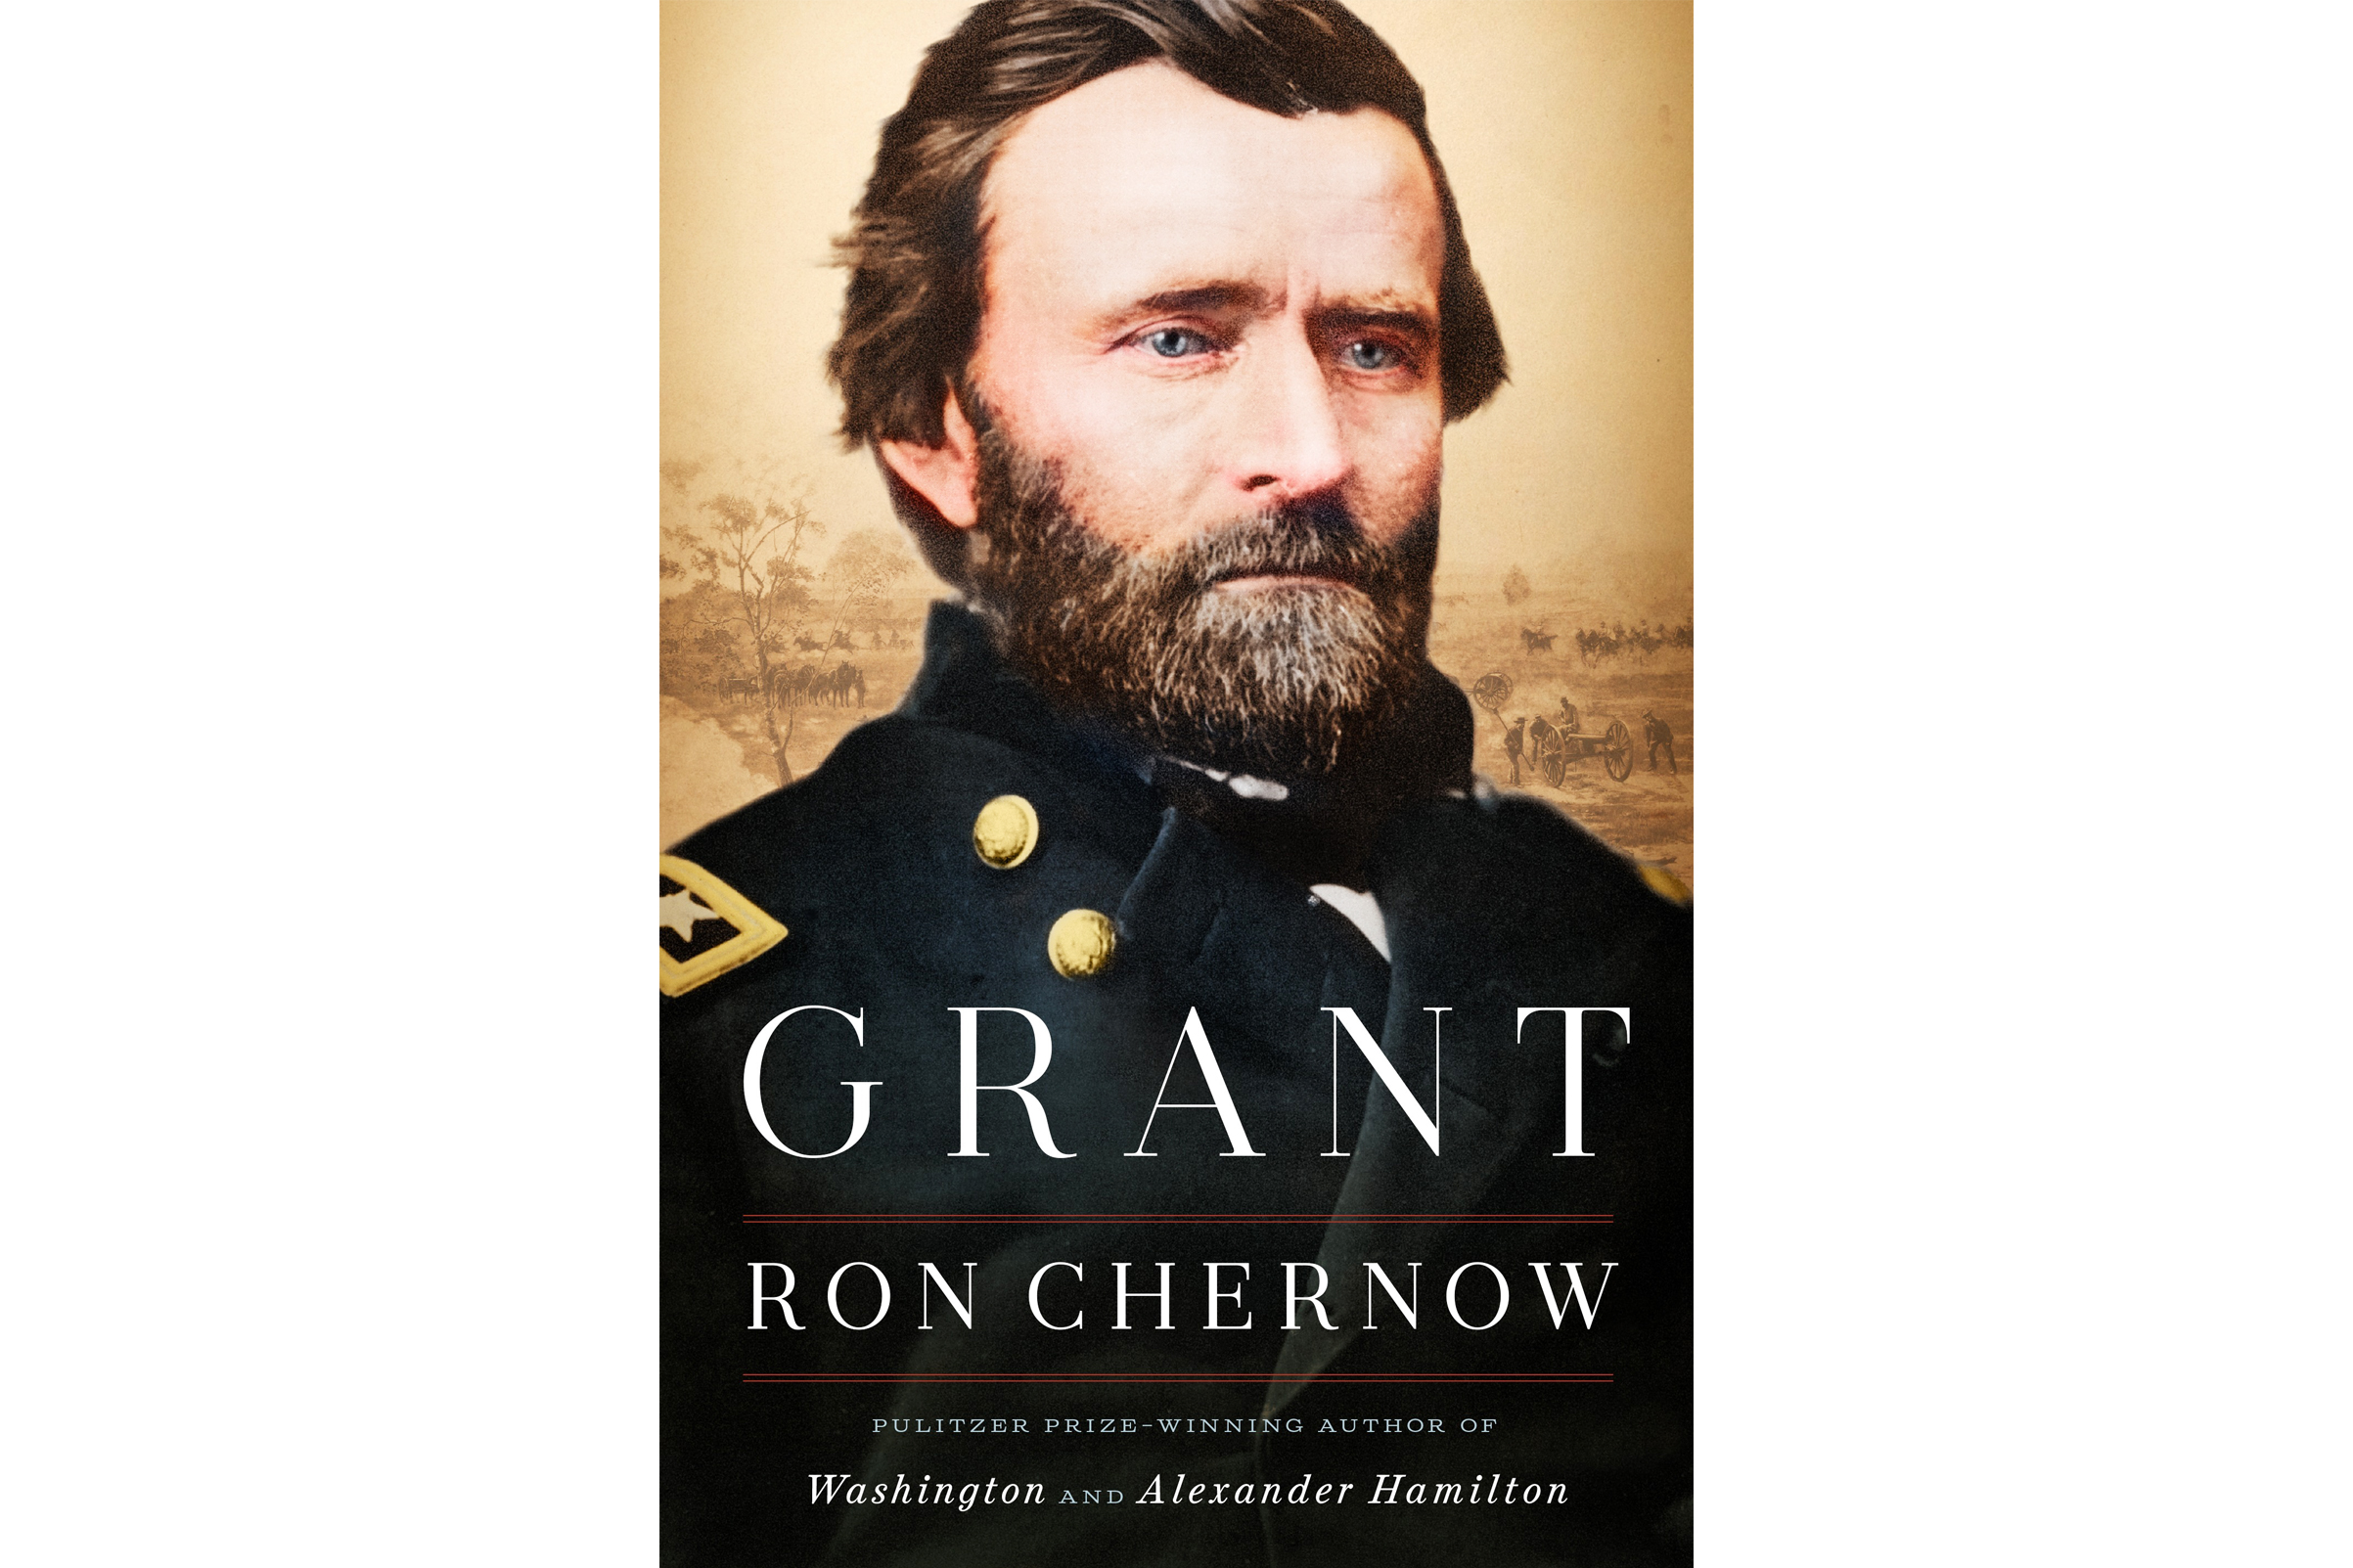 Best-selling biographer Ron Chernow